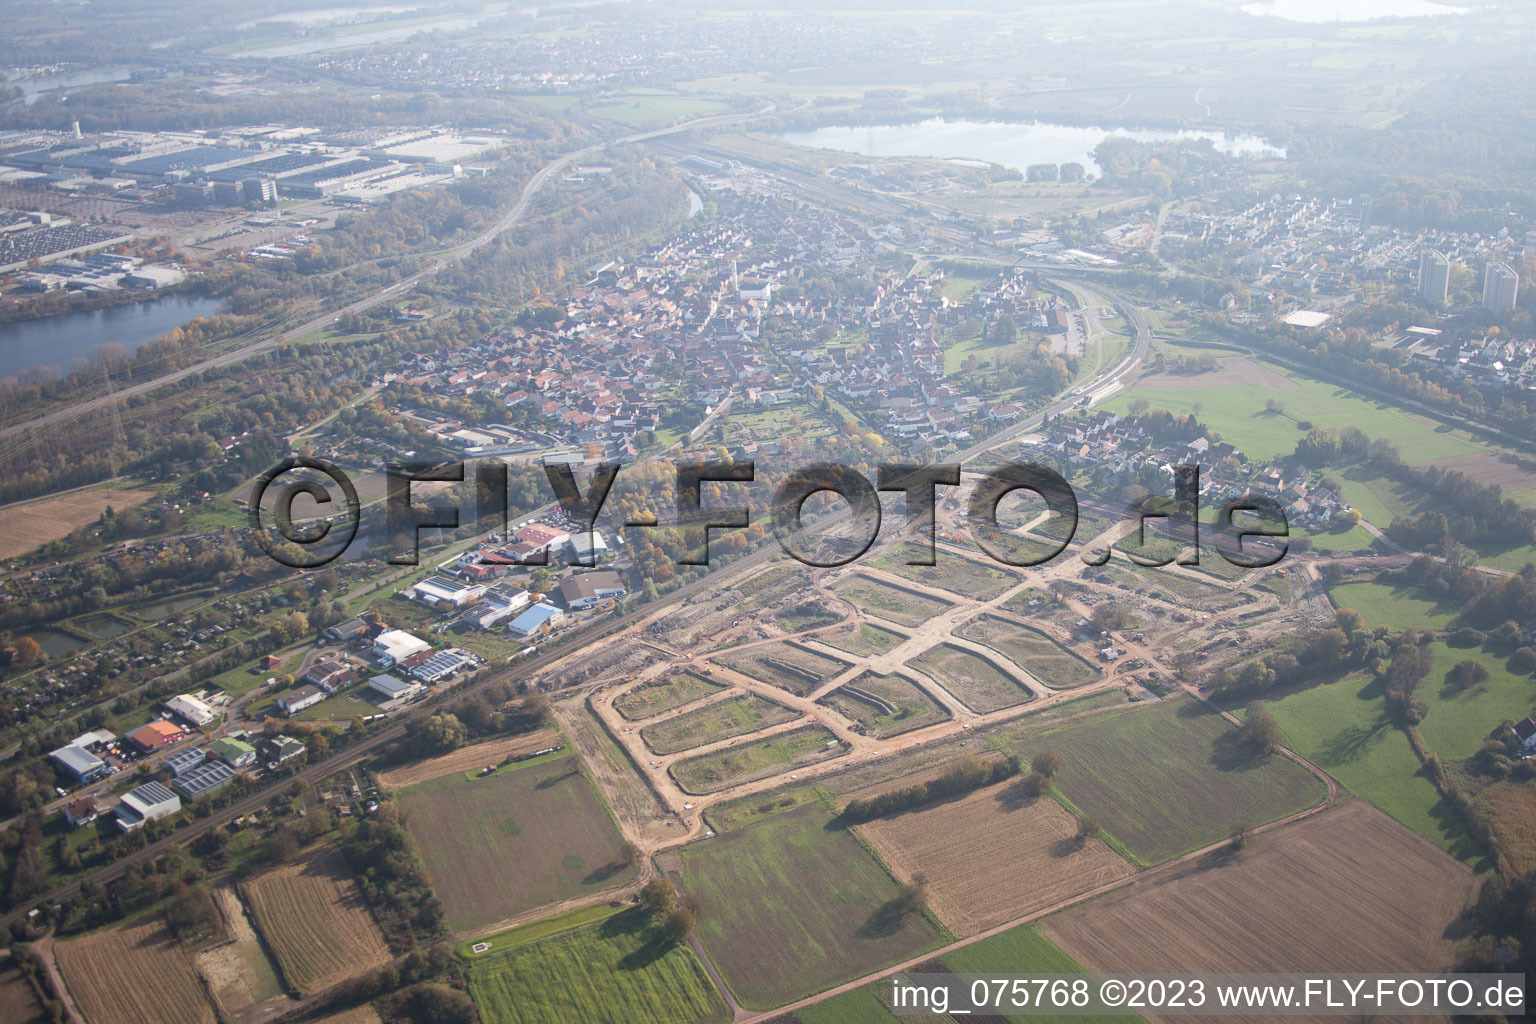 Aerial photograpy of Niederwiesen new development area in Wörth am Rhein in the state Rhineland-Palatinate, Germany